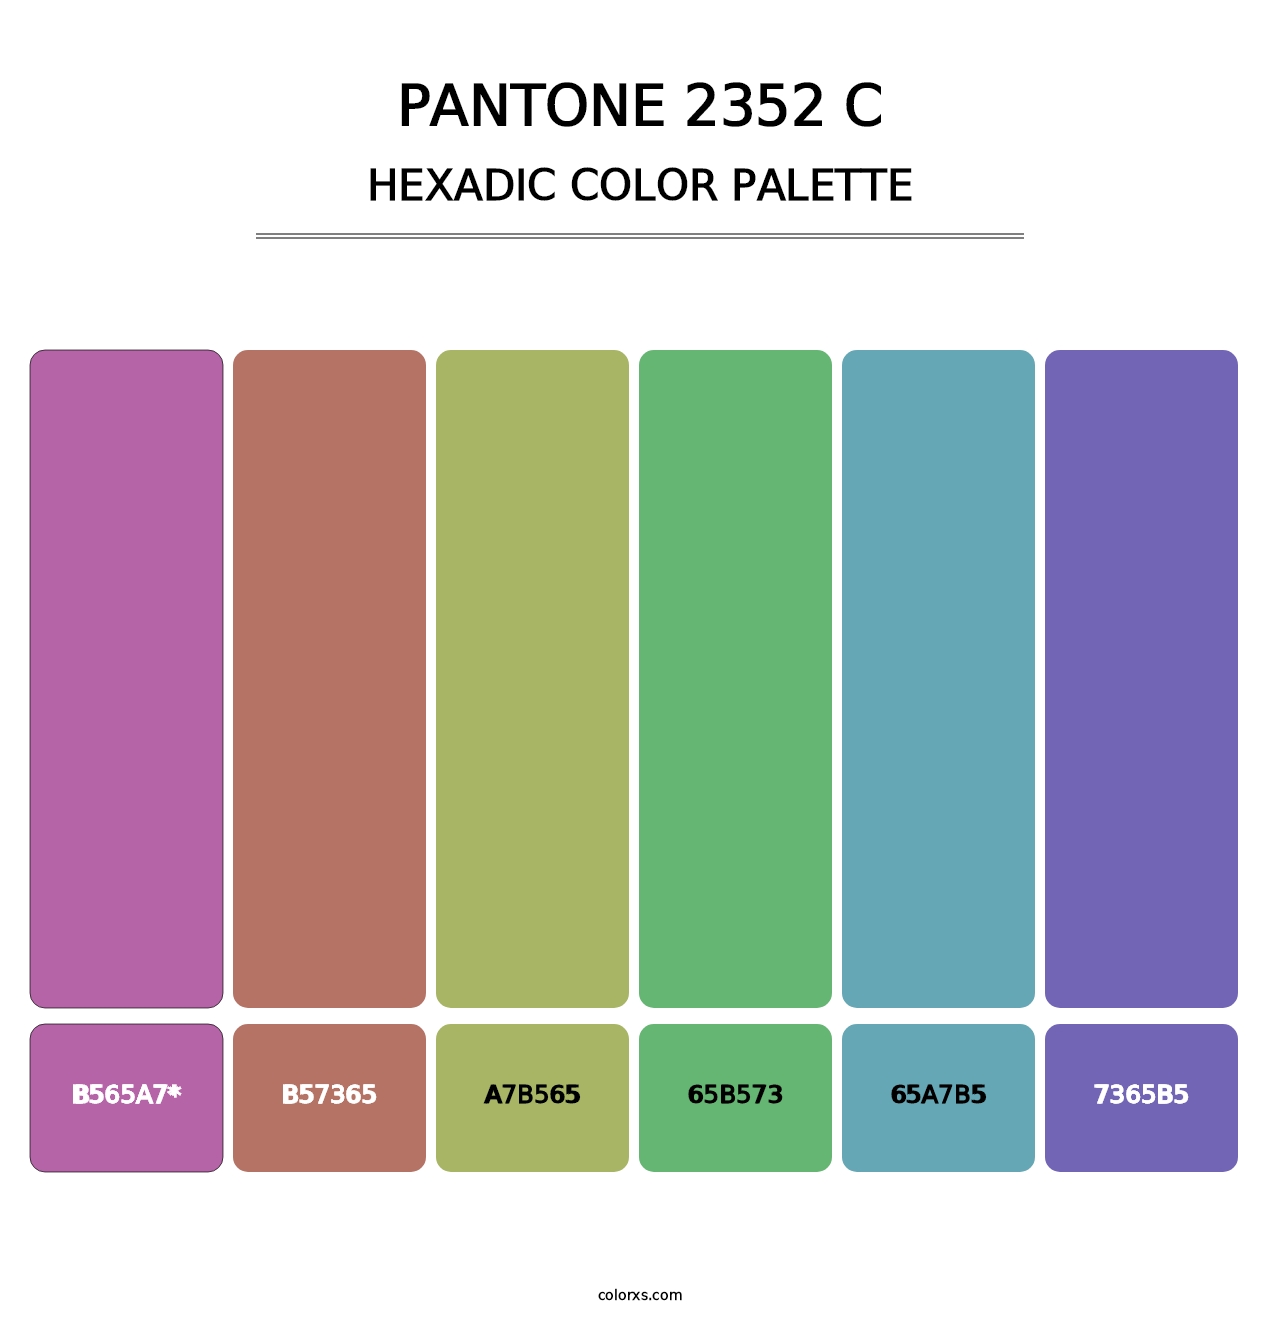 PANTONE 2352 C - Hexadic Color Palette